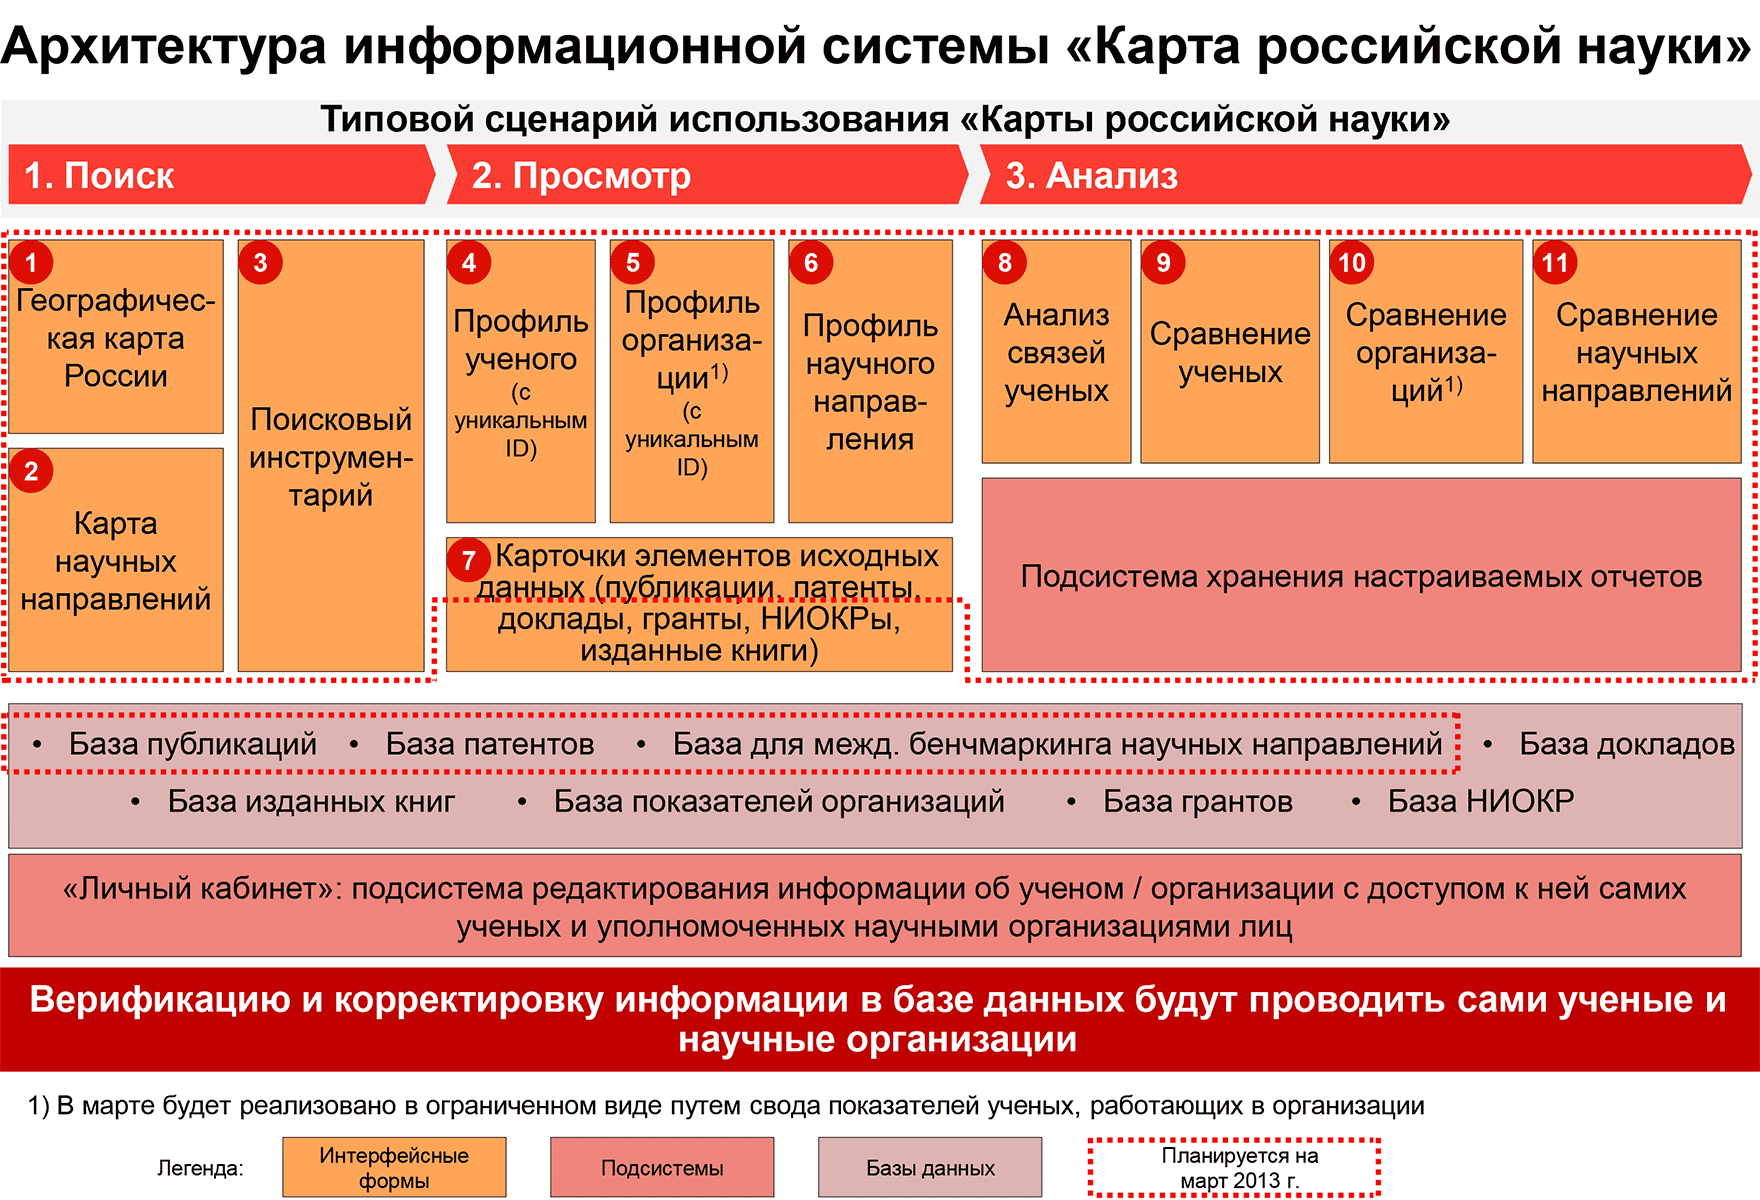 Обзор ИС «Карта российской науки»: от концепции до реализации